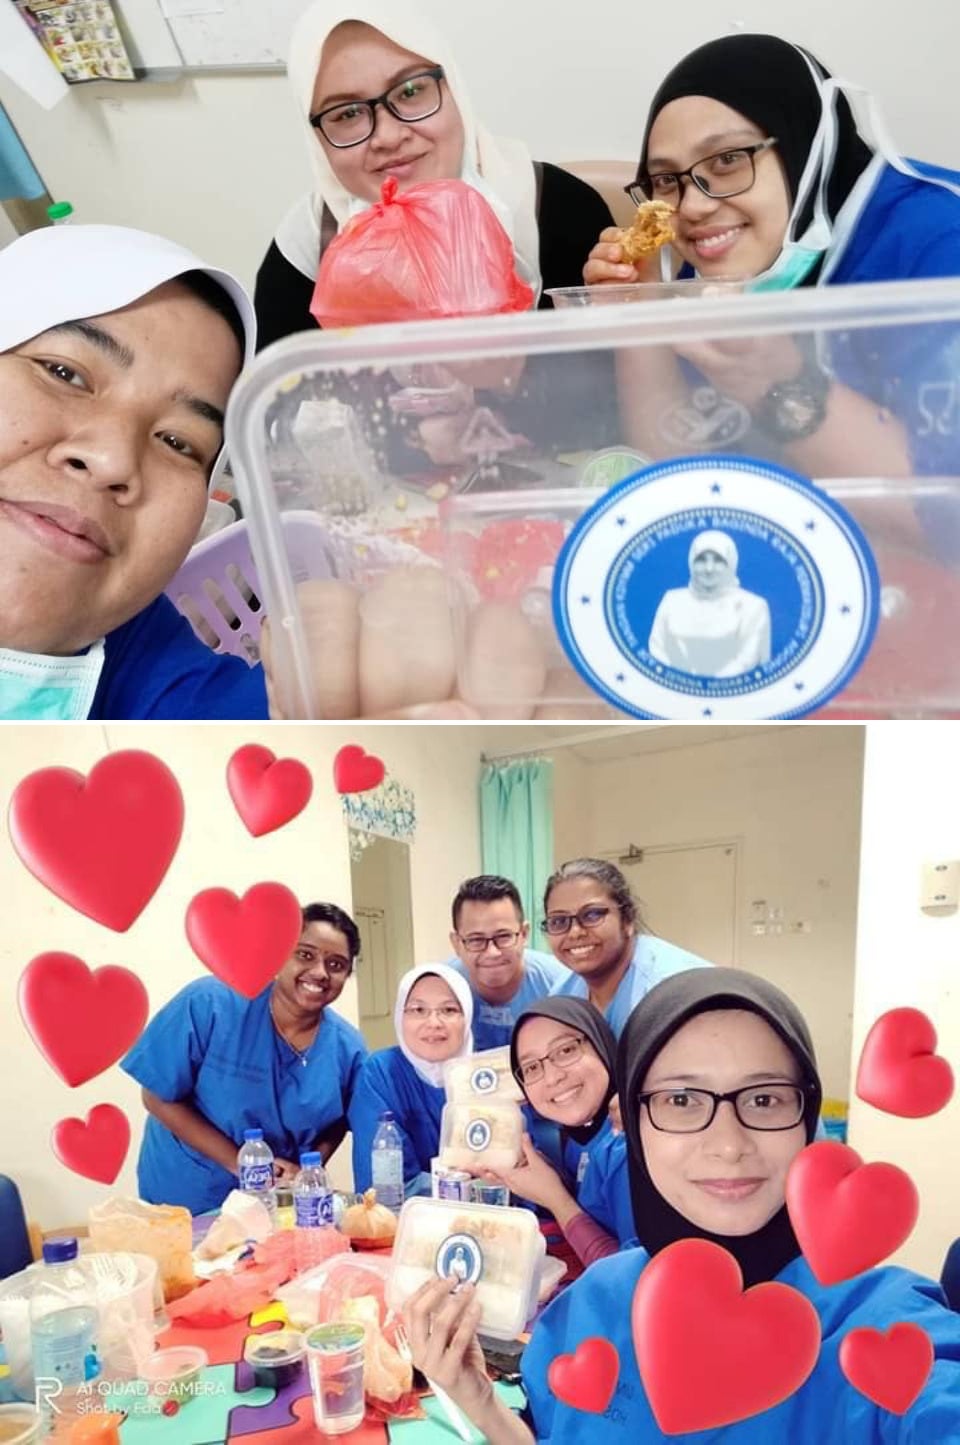 Kind Raja Permaisuri Agong Treats Sg Buloh Hospital And Hkl Covid-19 Medical Team With Homecooked Food - World Of Buzz